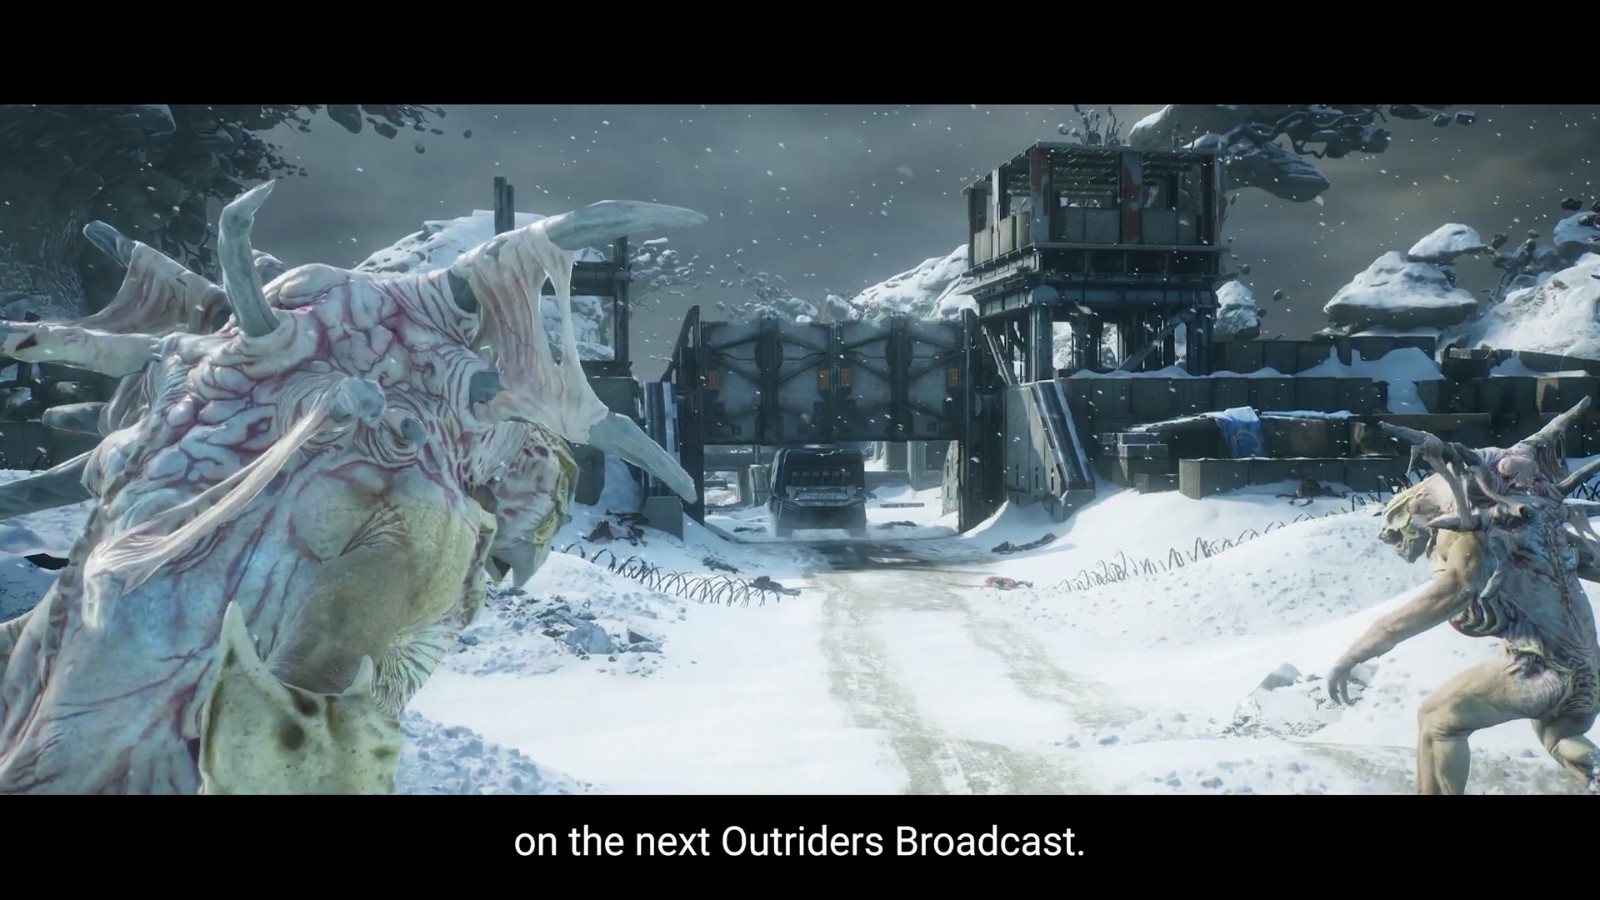 《Outsiders》新直播確定 將深度展示新資料片Worldslayer